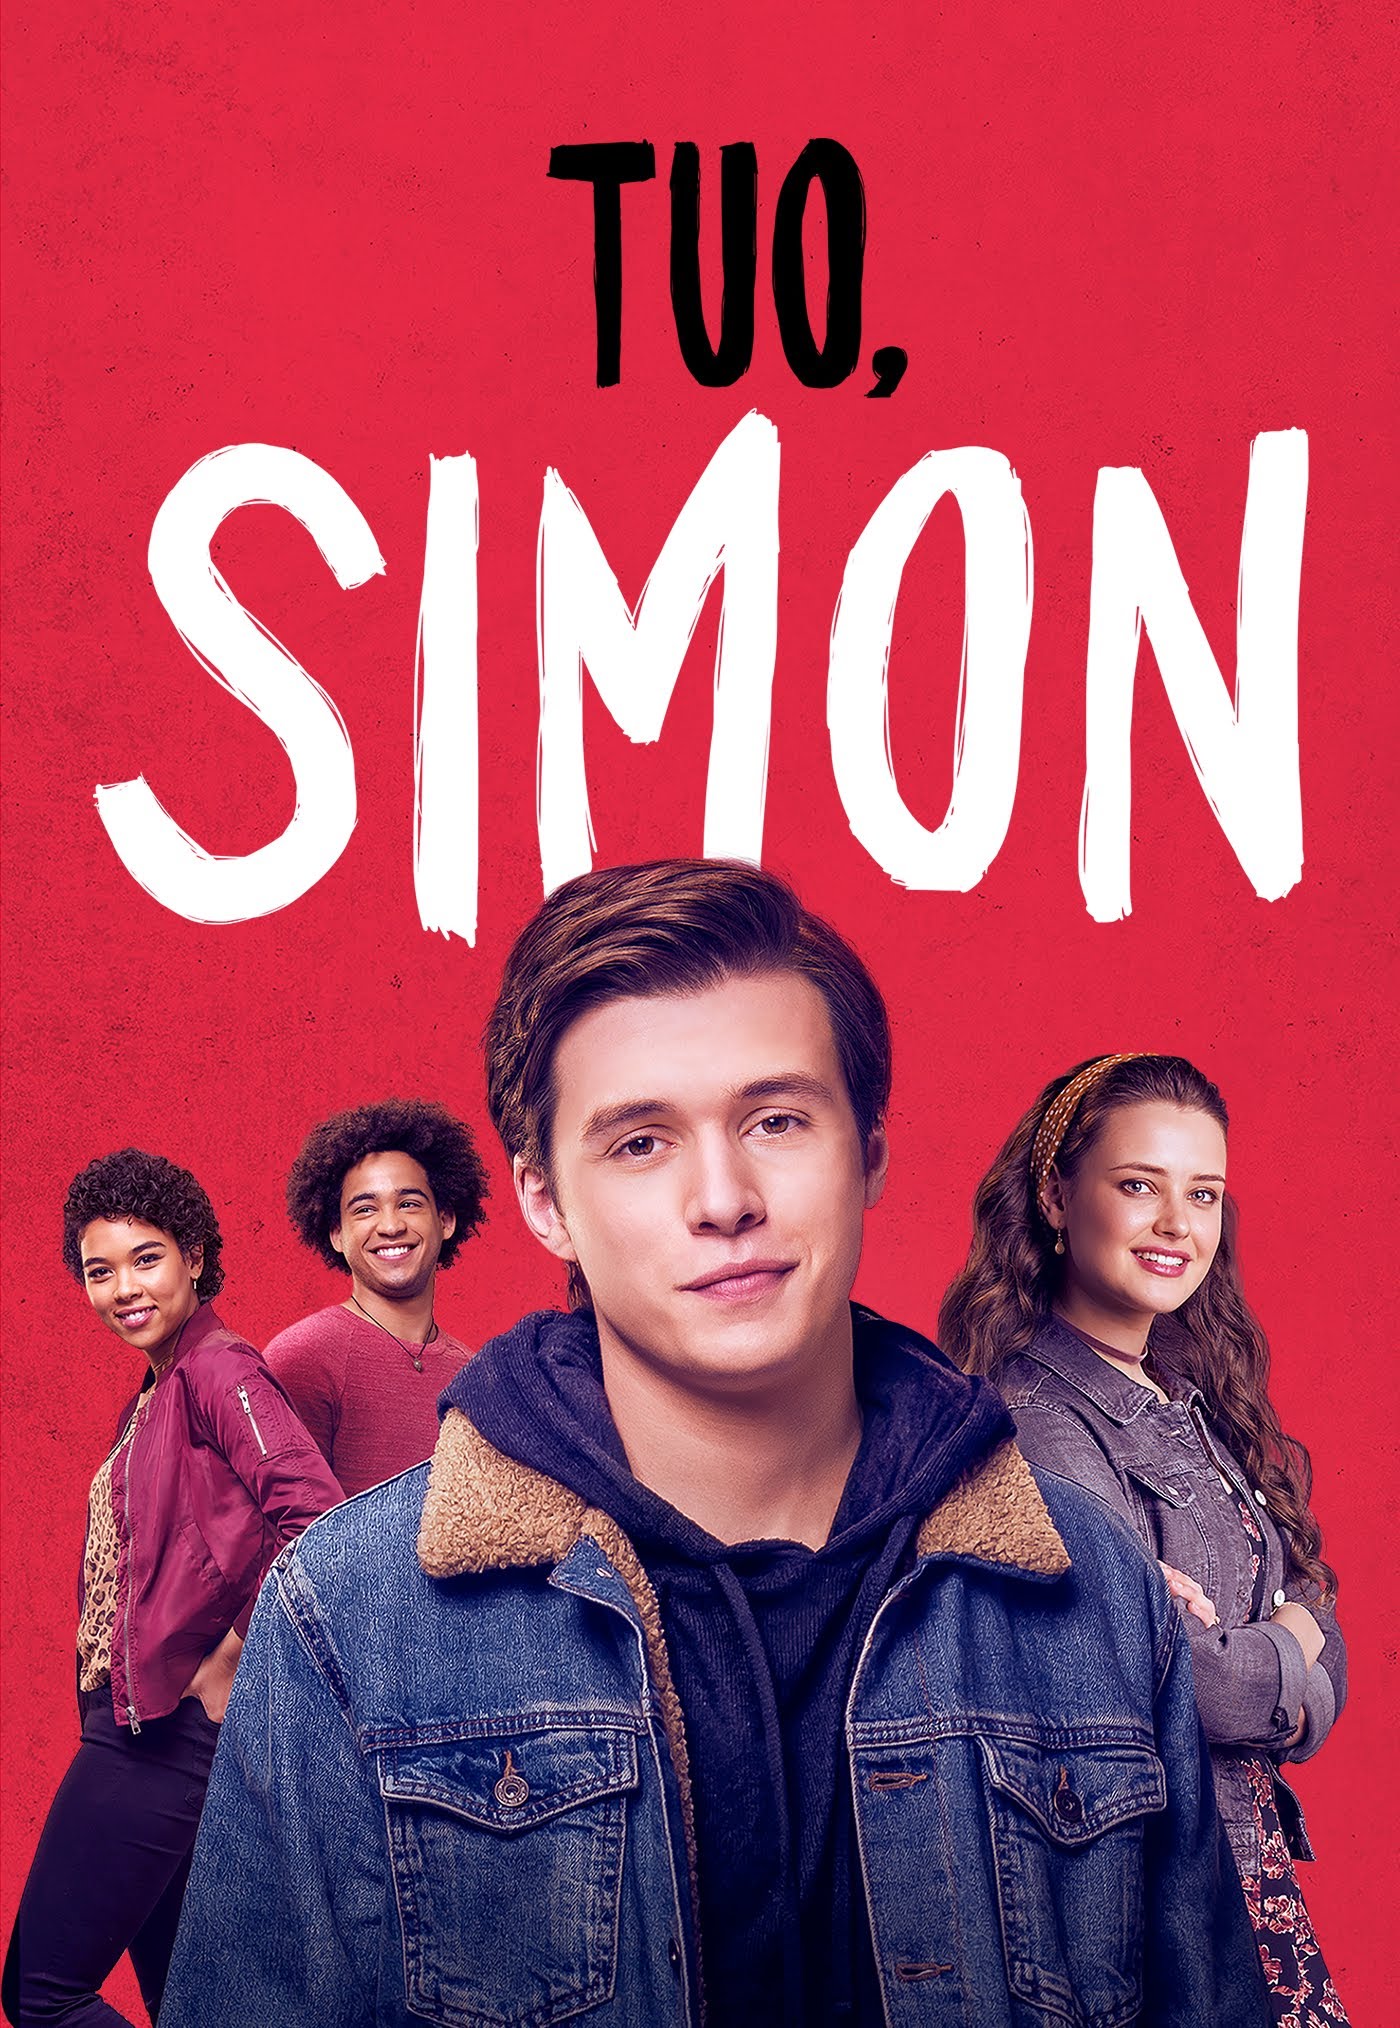 Tuo, Simon [HD] (2018)